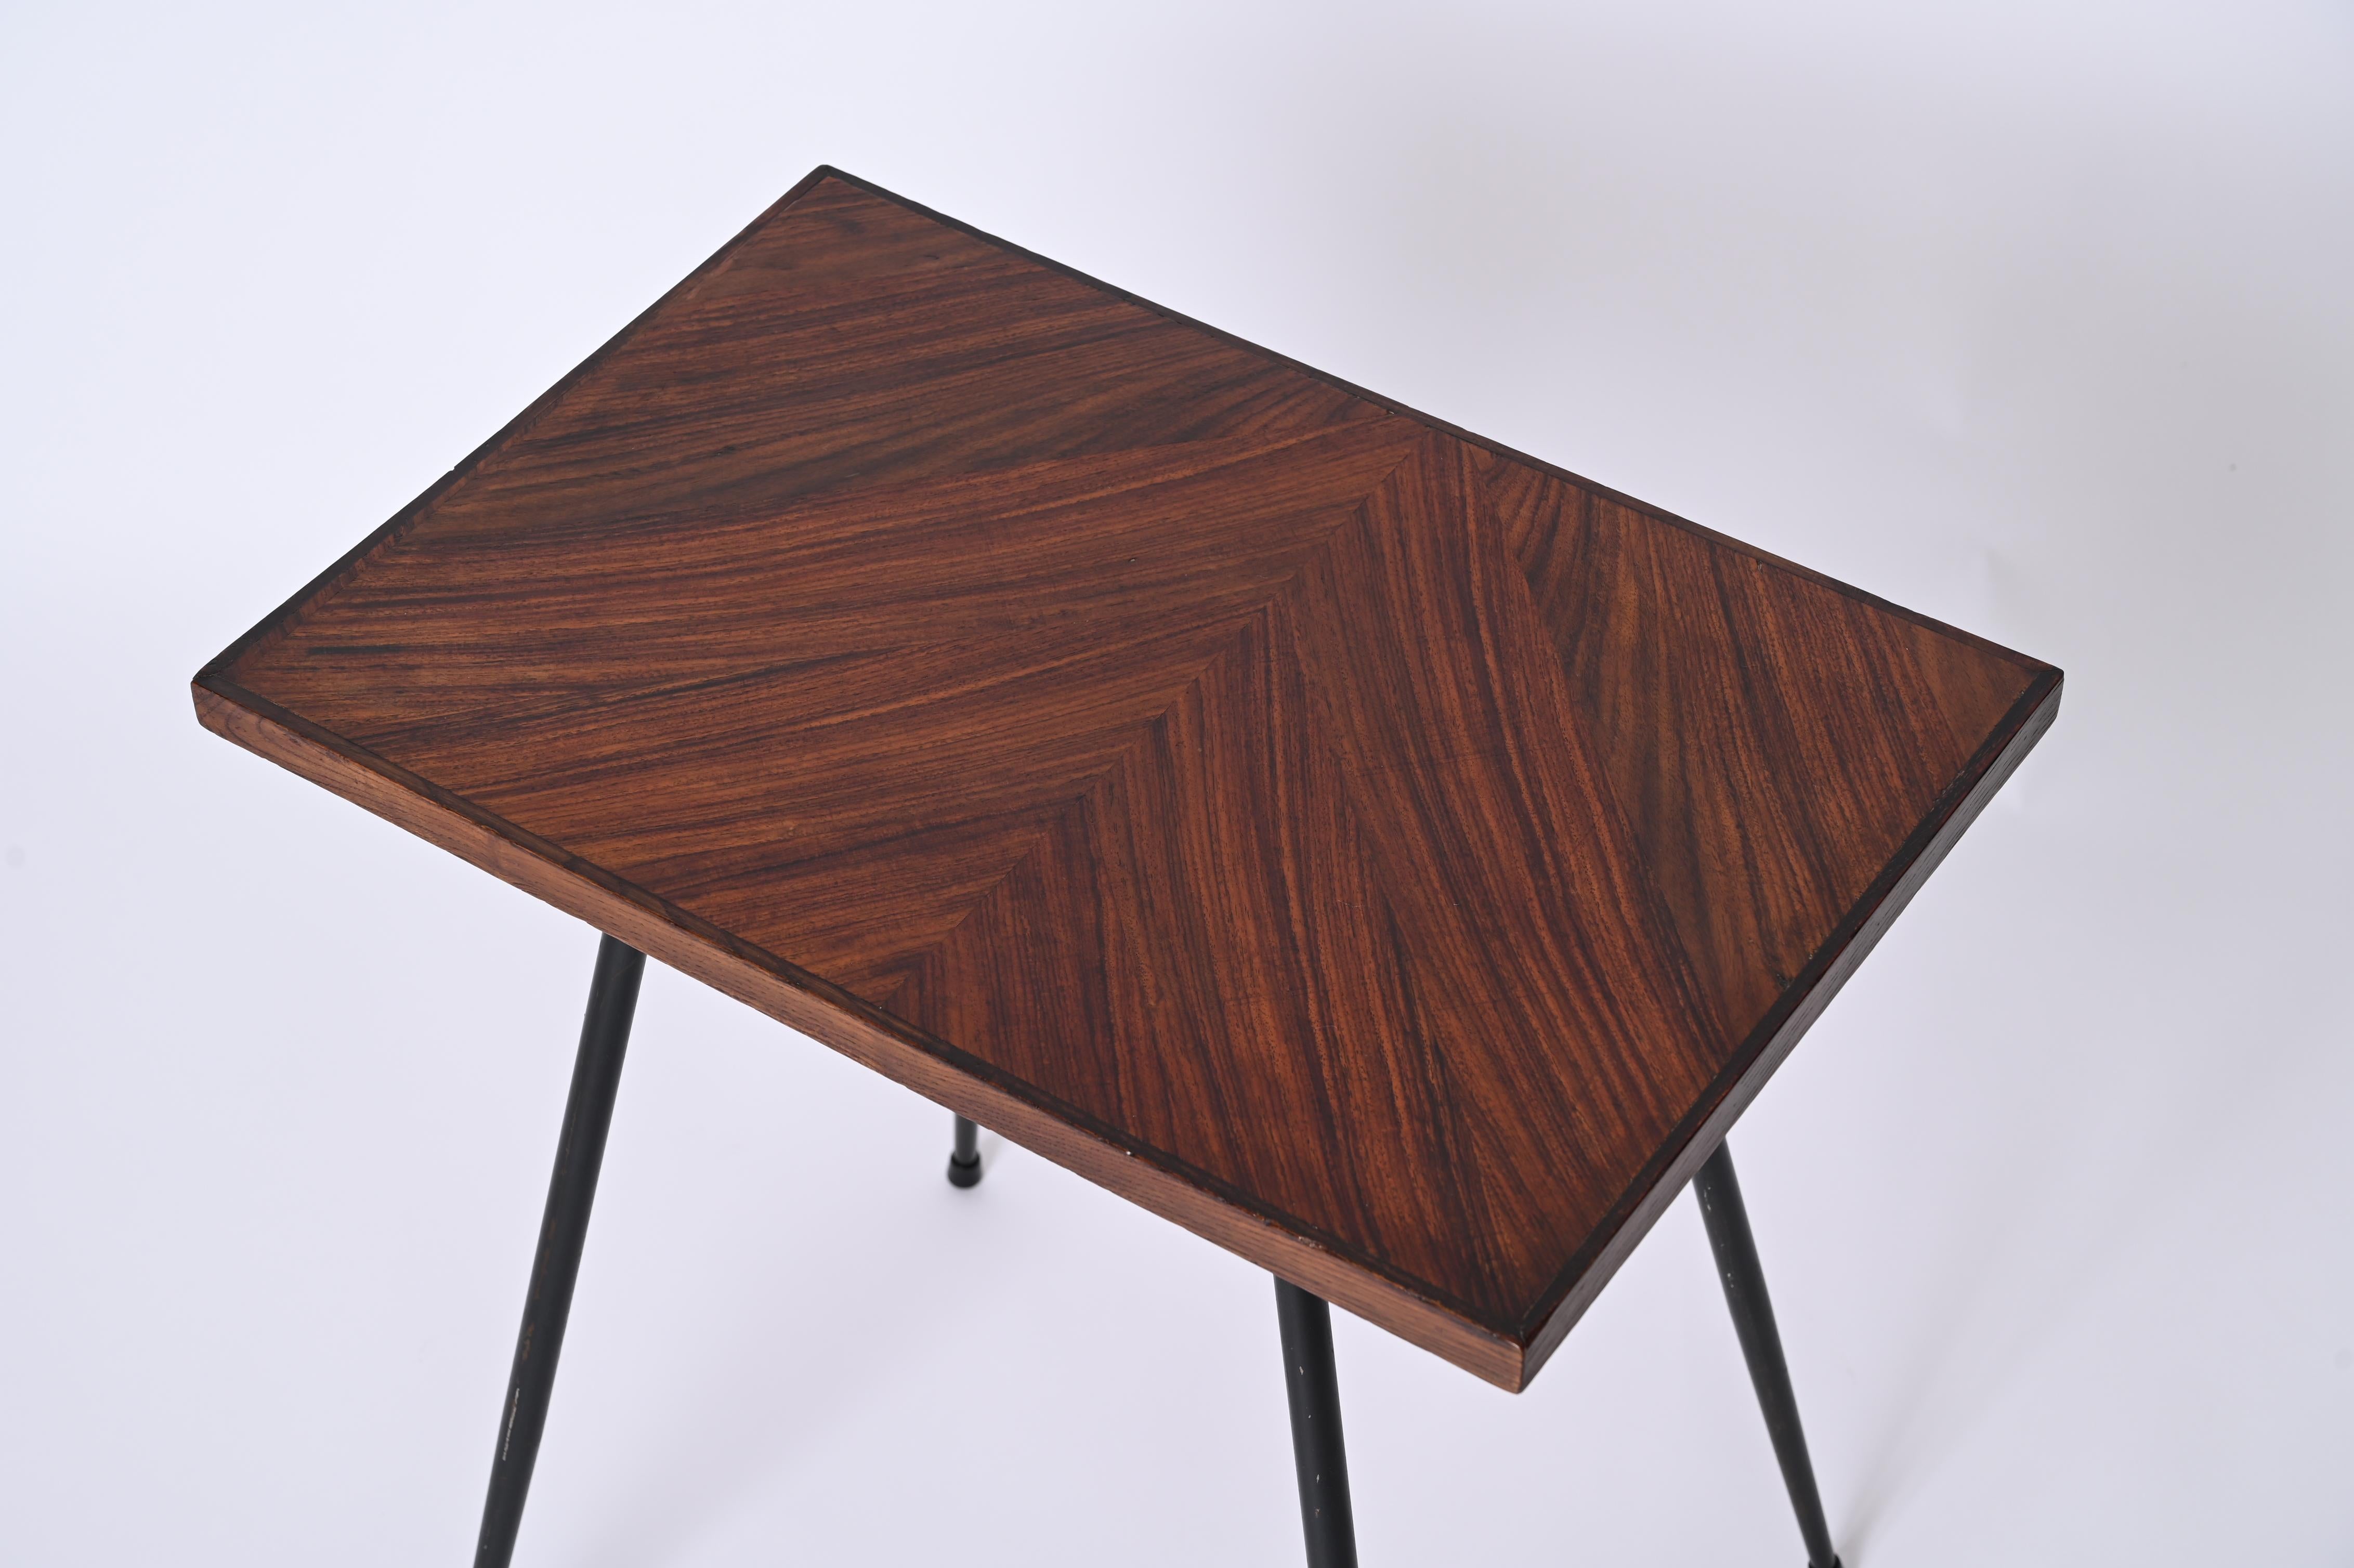 Italian Midcentury Rectangular Side Table in Teak Wood and Enameled Metal, 1950s For Sale 1